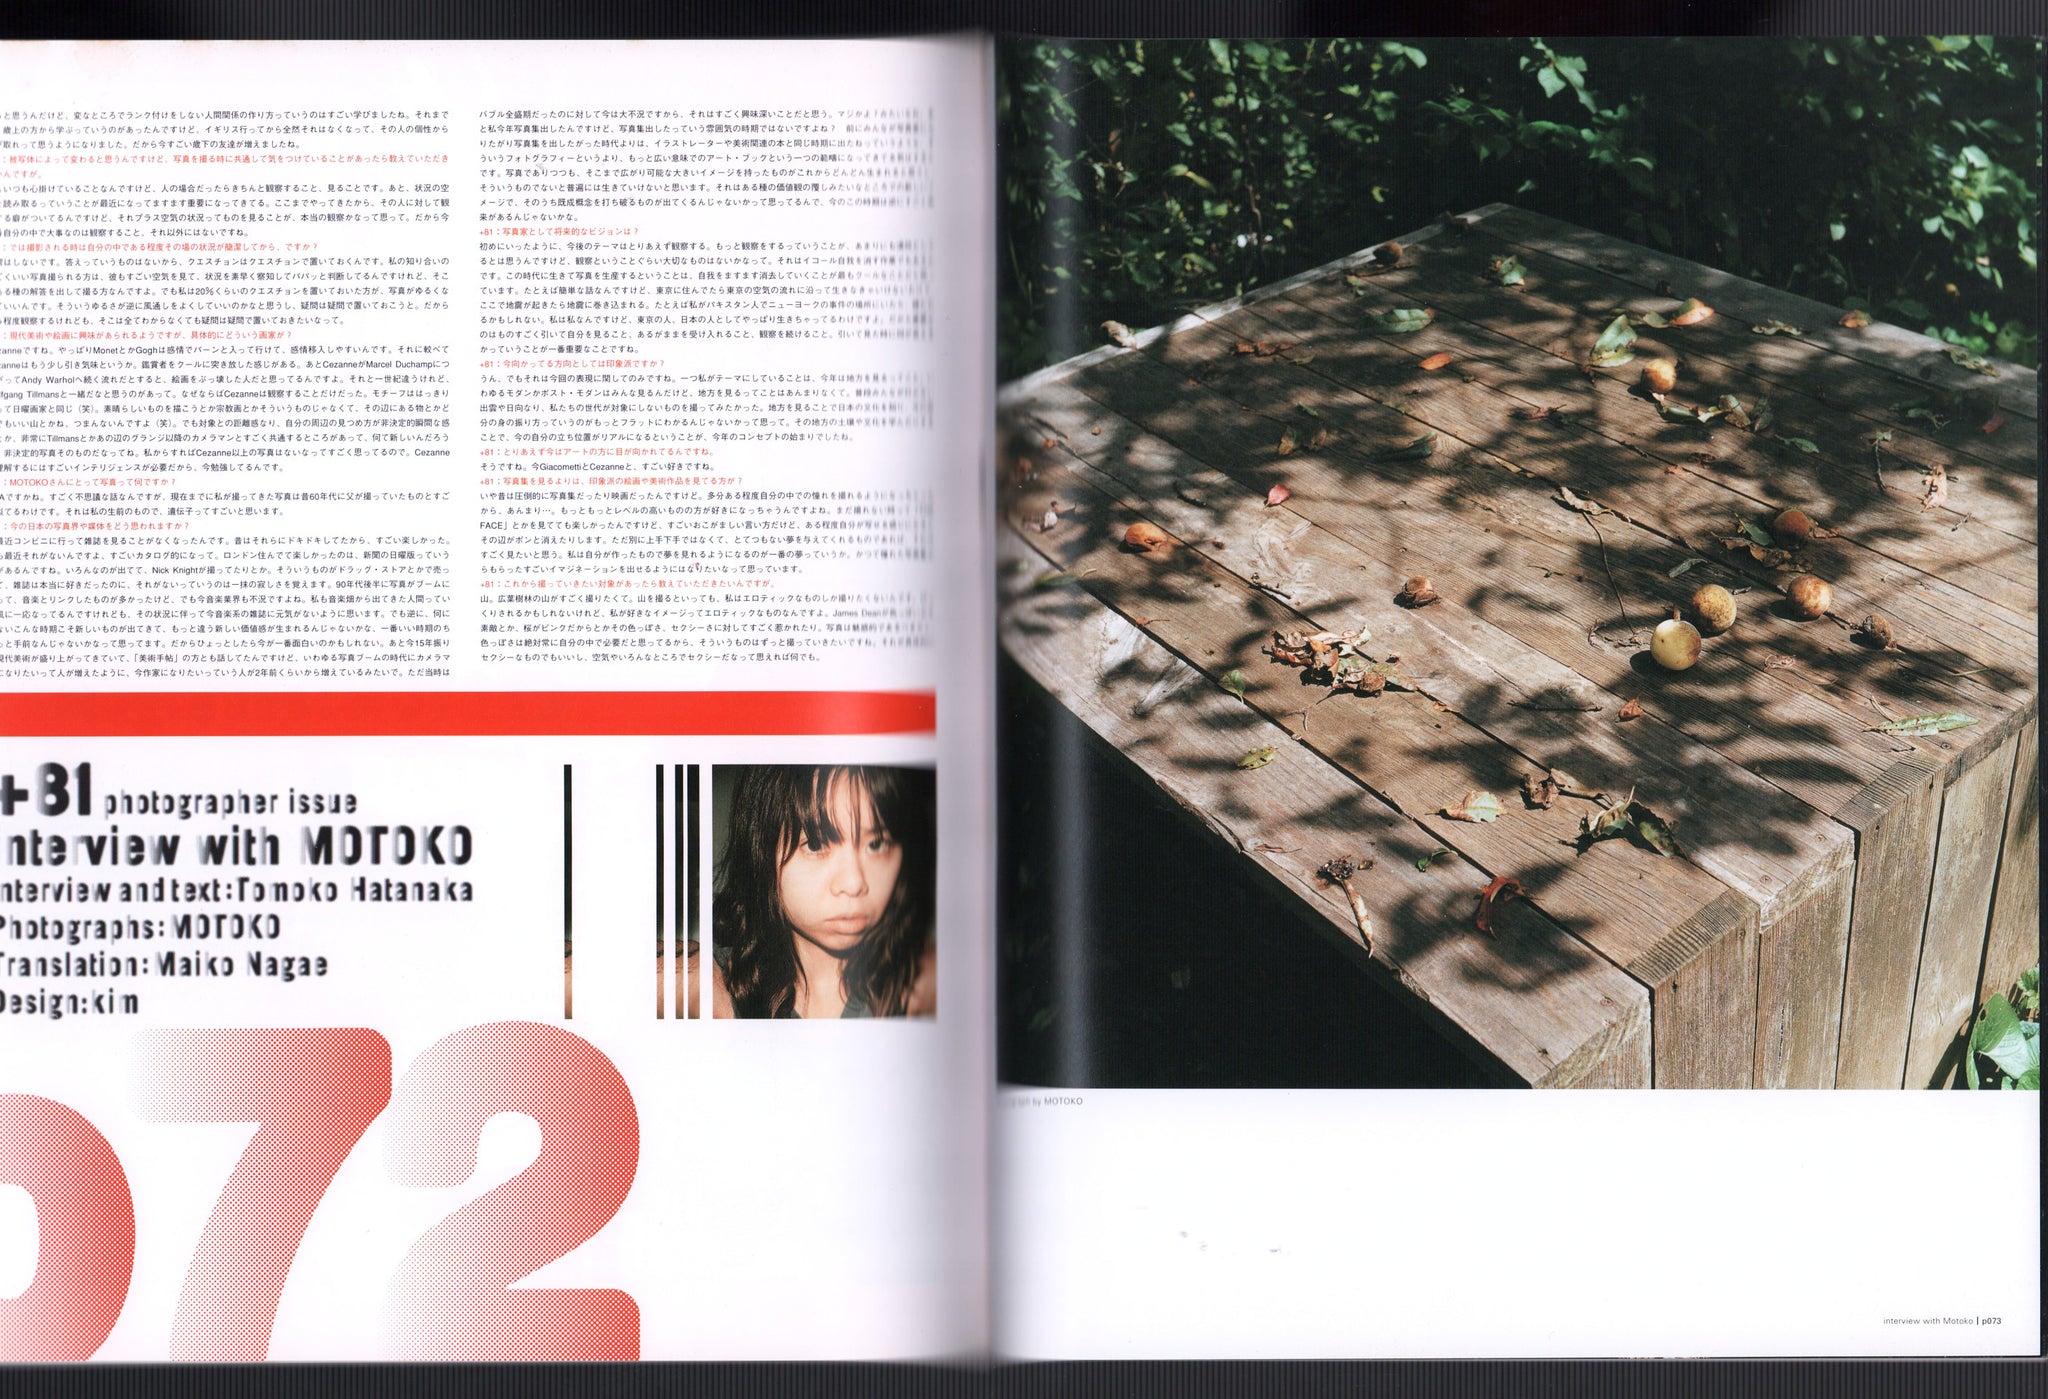 +81 Plus Eighty One magazine #13 [winter 2001 / photographer issue: new york tokyo]